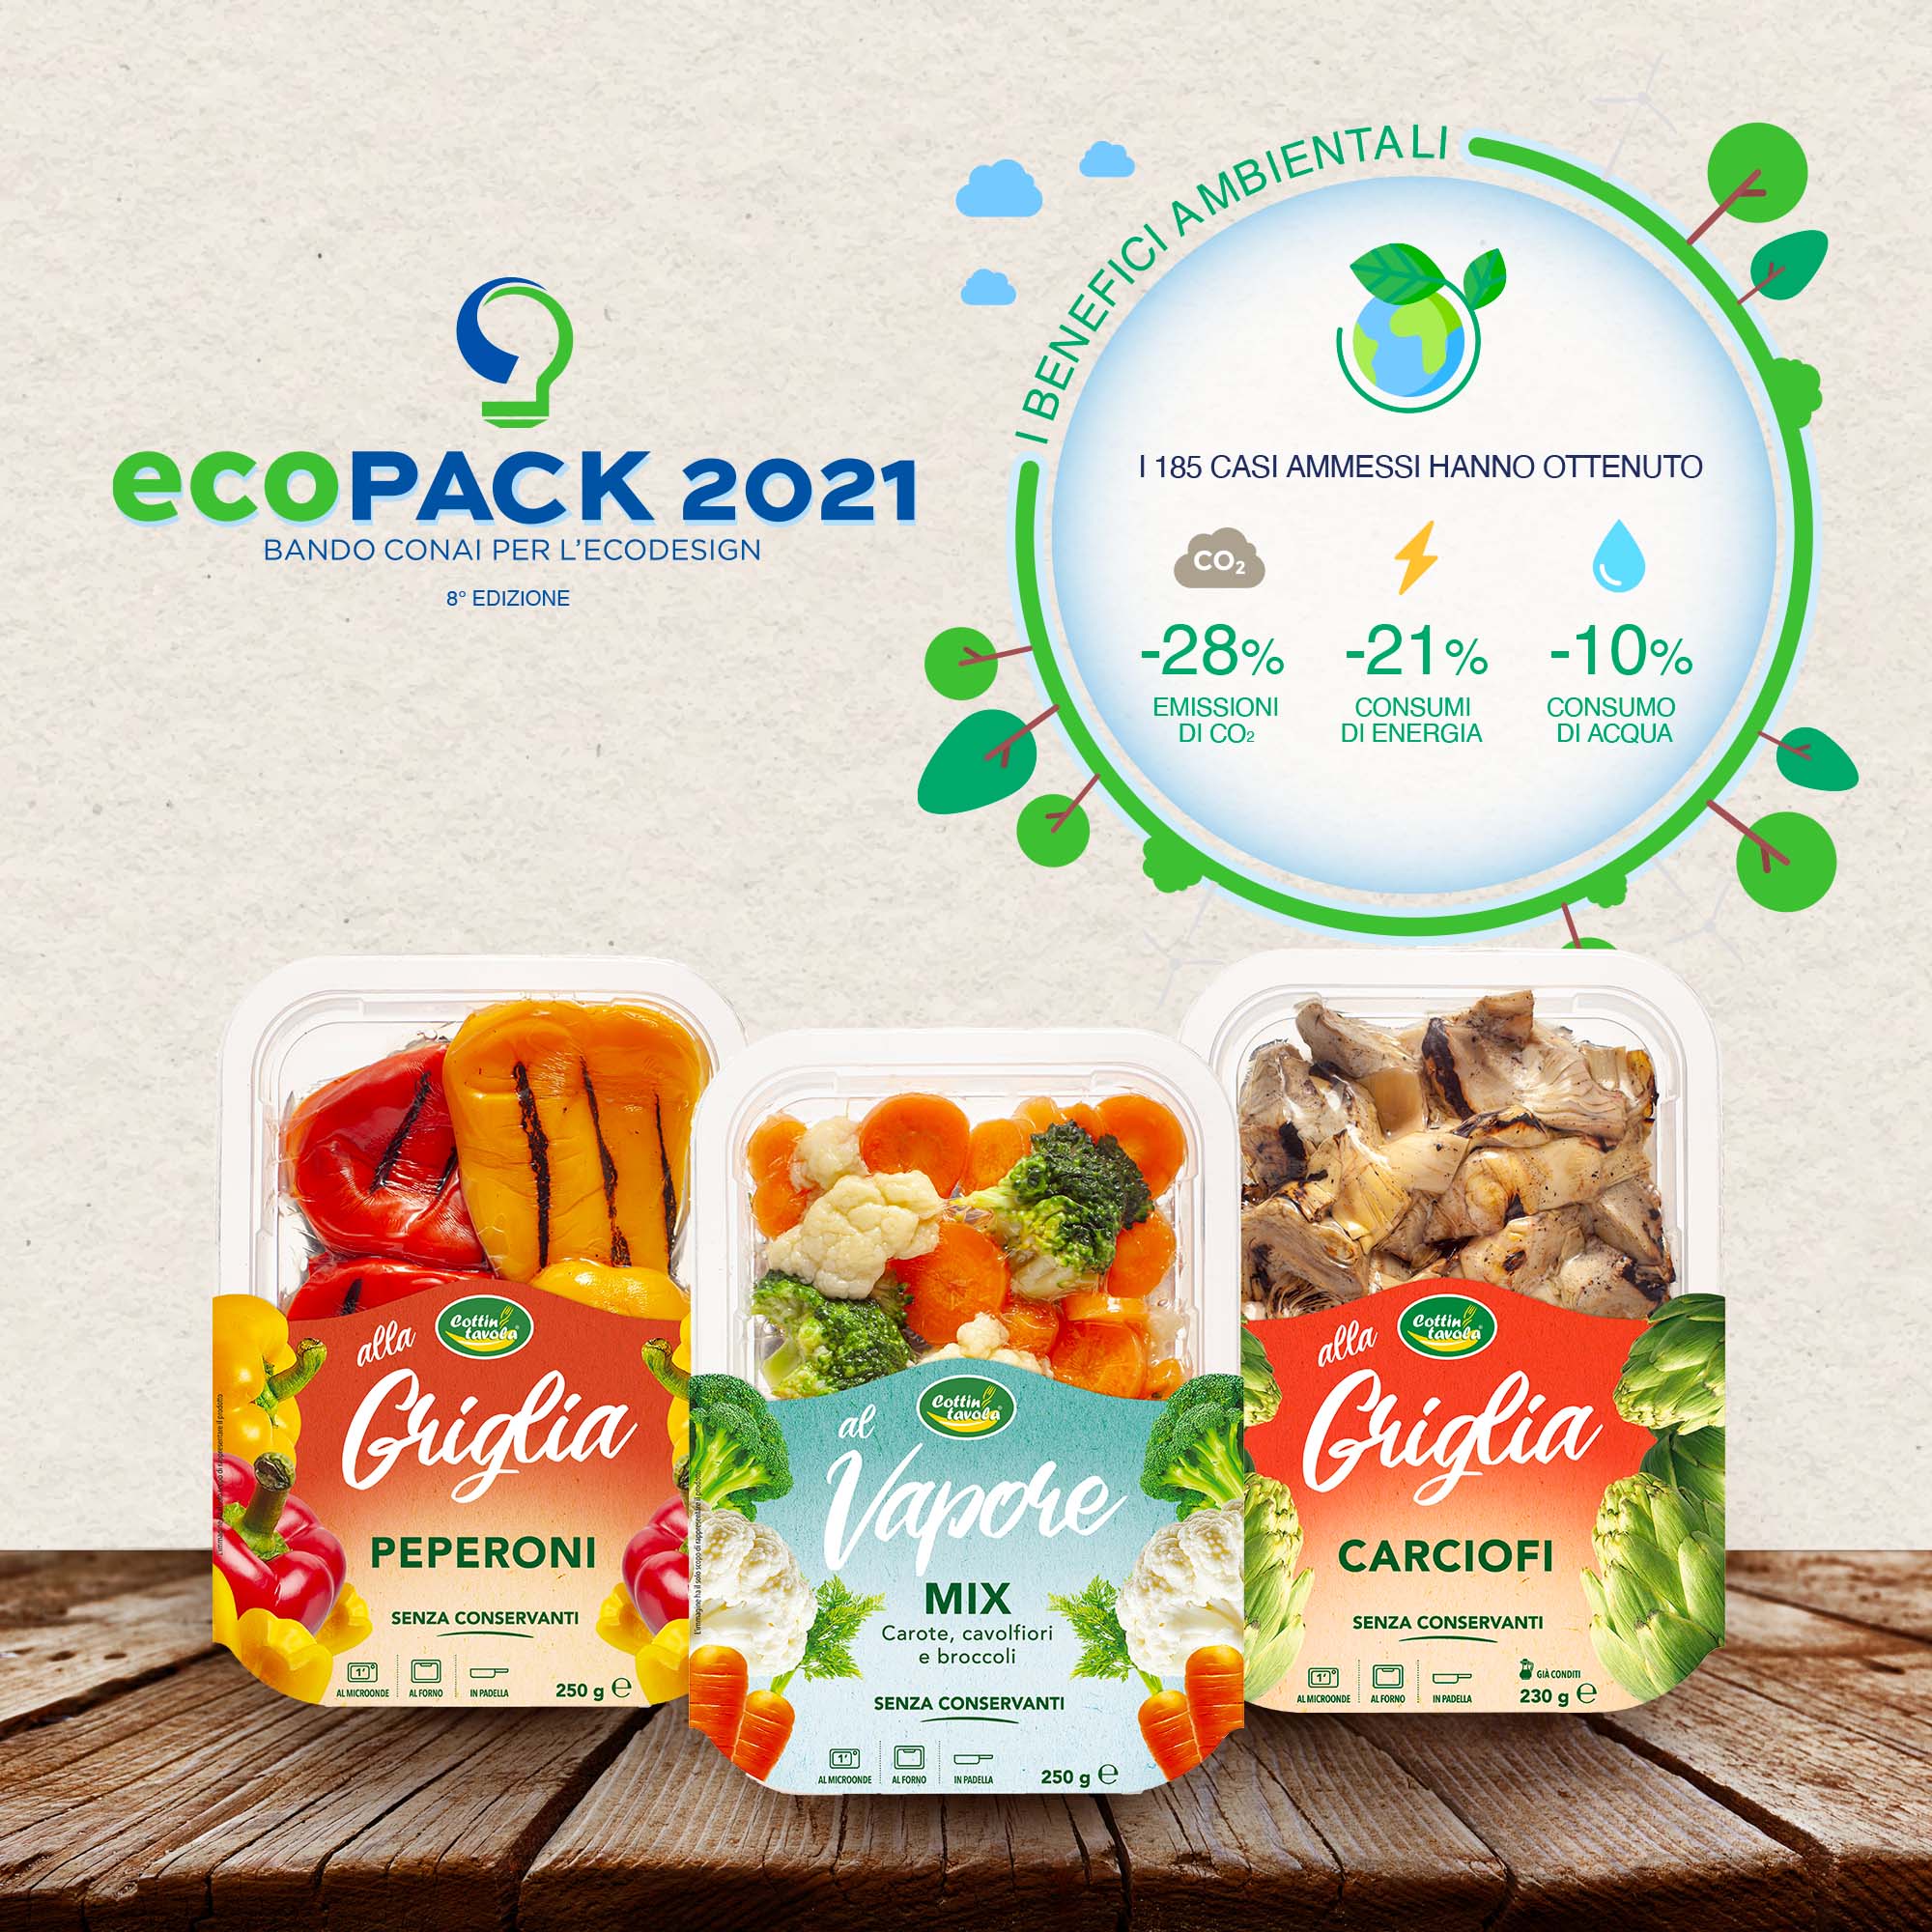 Pack ecologici vincitori dell'Ecopackaging Award 2021